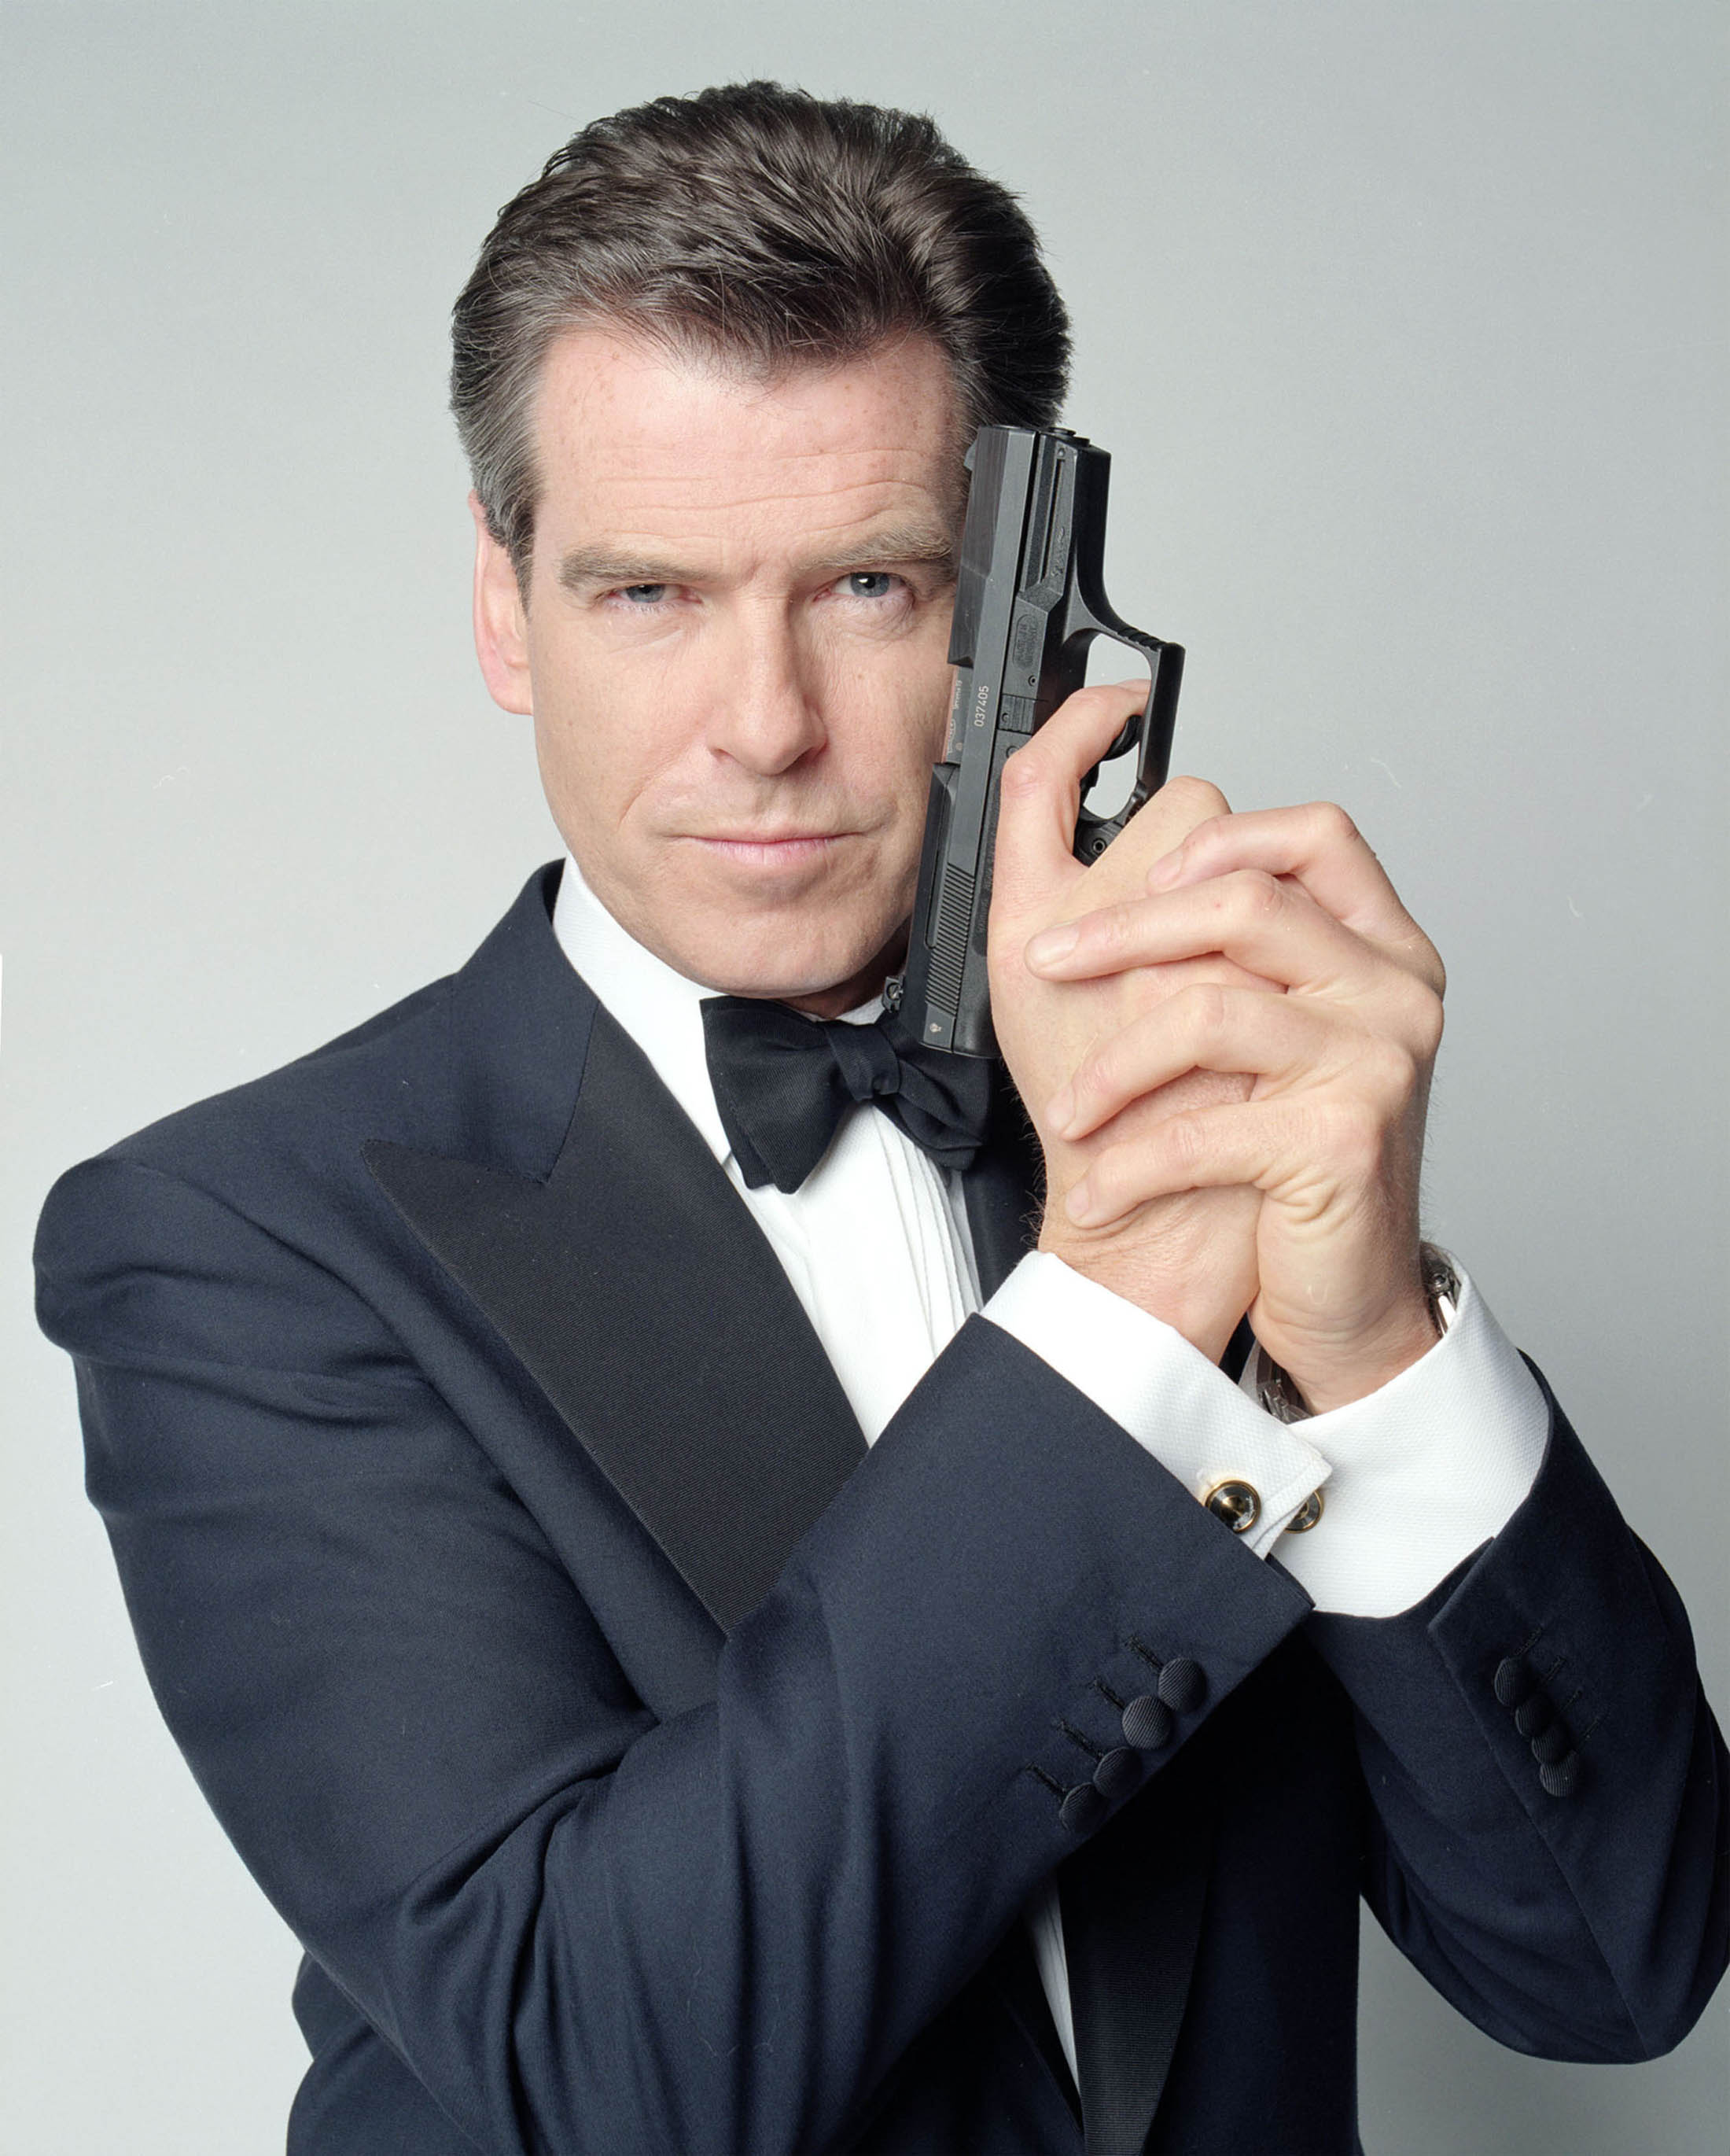 James Bond Suit Pierce Brosnan HD Wallpaper, Background Image